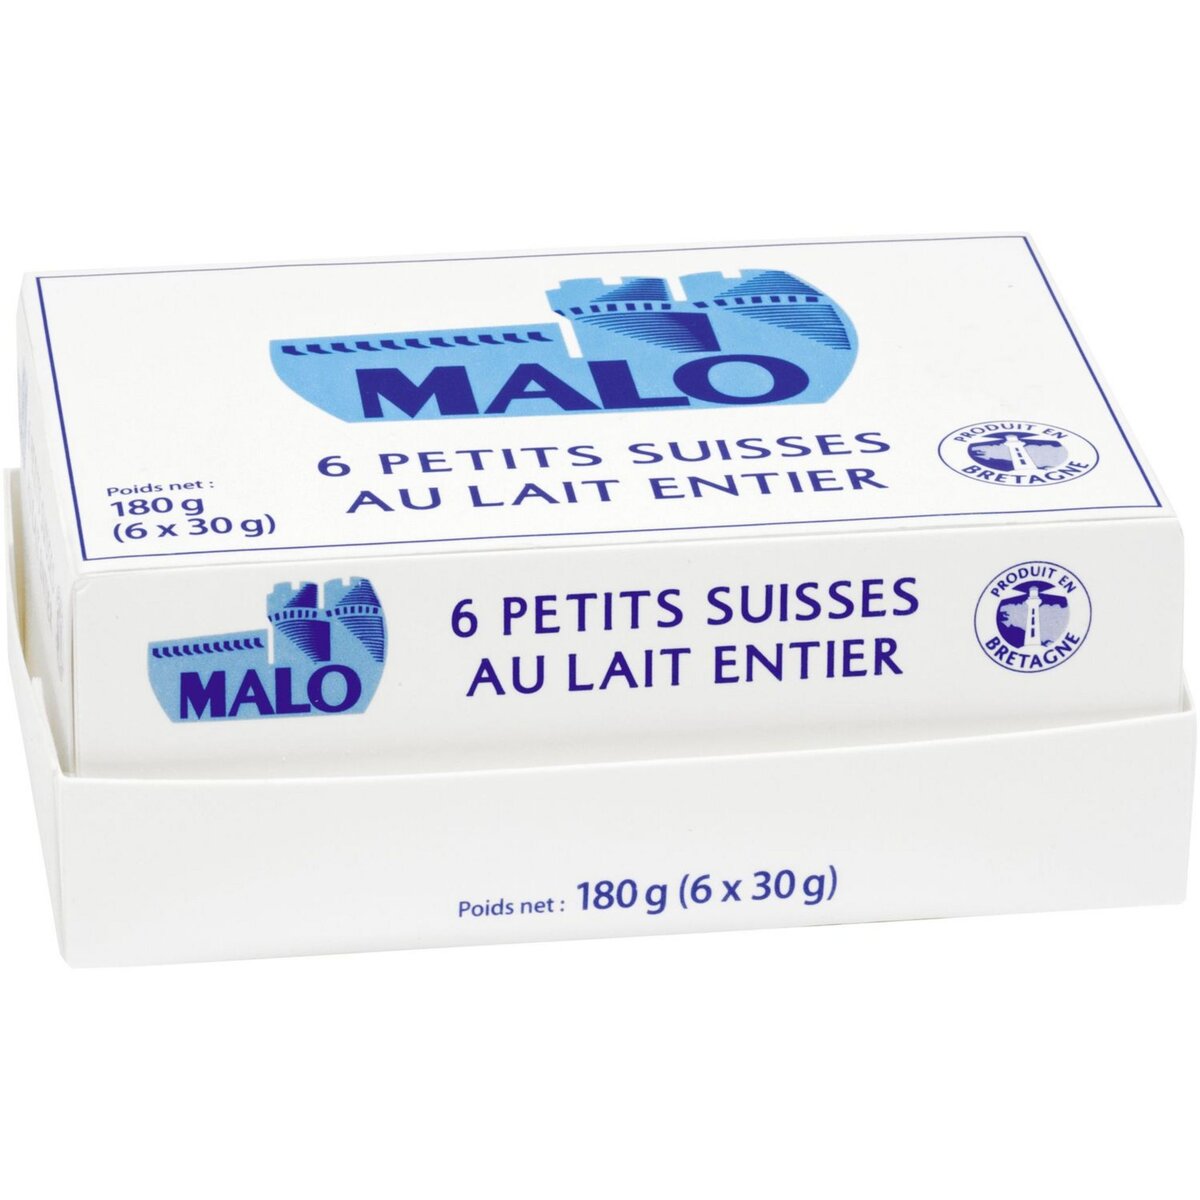 MALO Malo petits suisses 40% x6